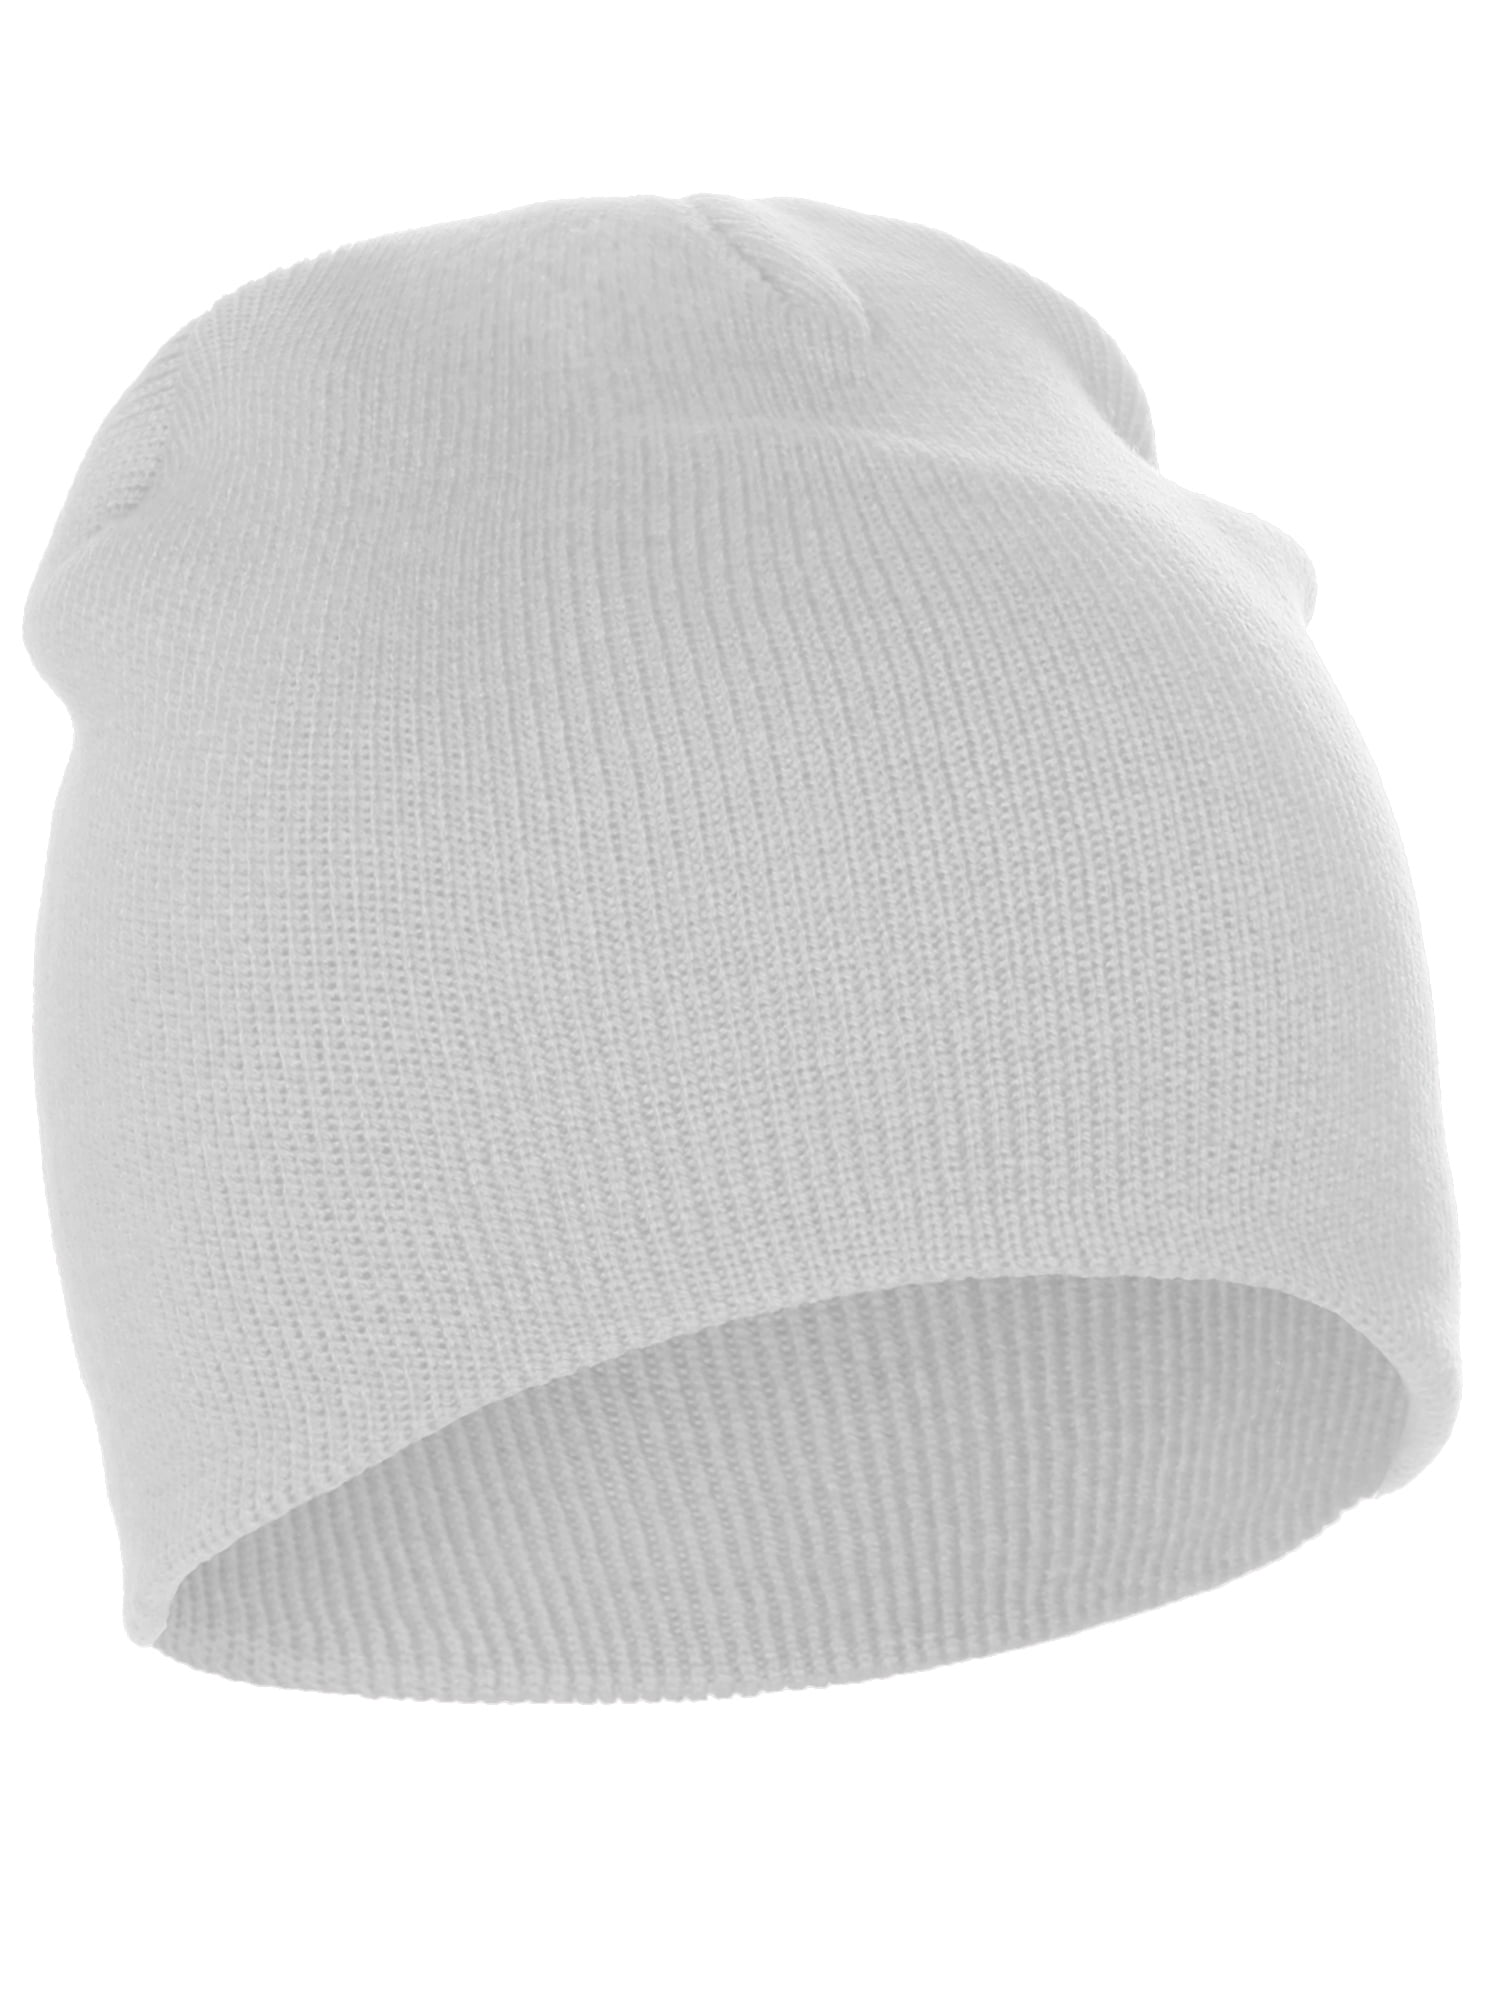 Classic Plain Cuffless Beanie Winter Knit Hat Skully Cap, Walmart.com